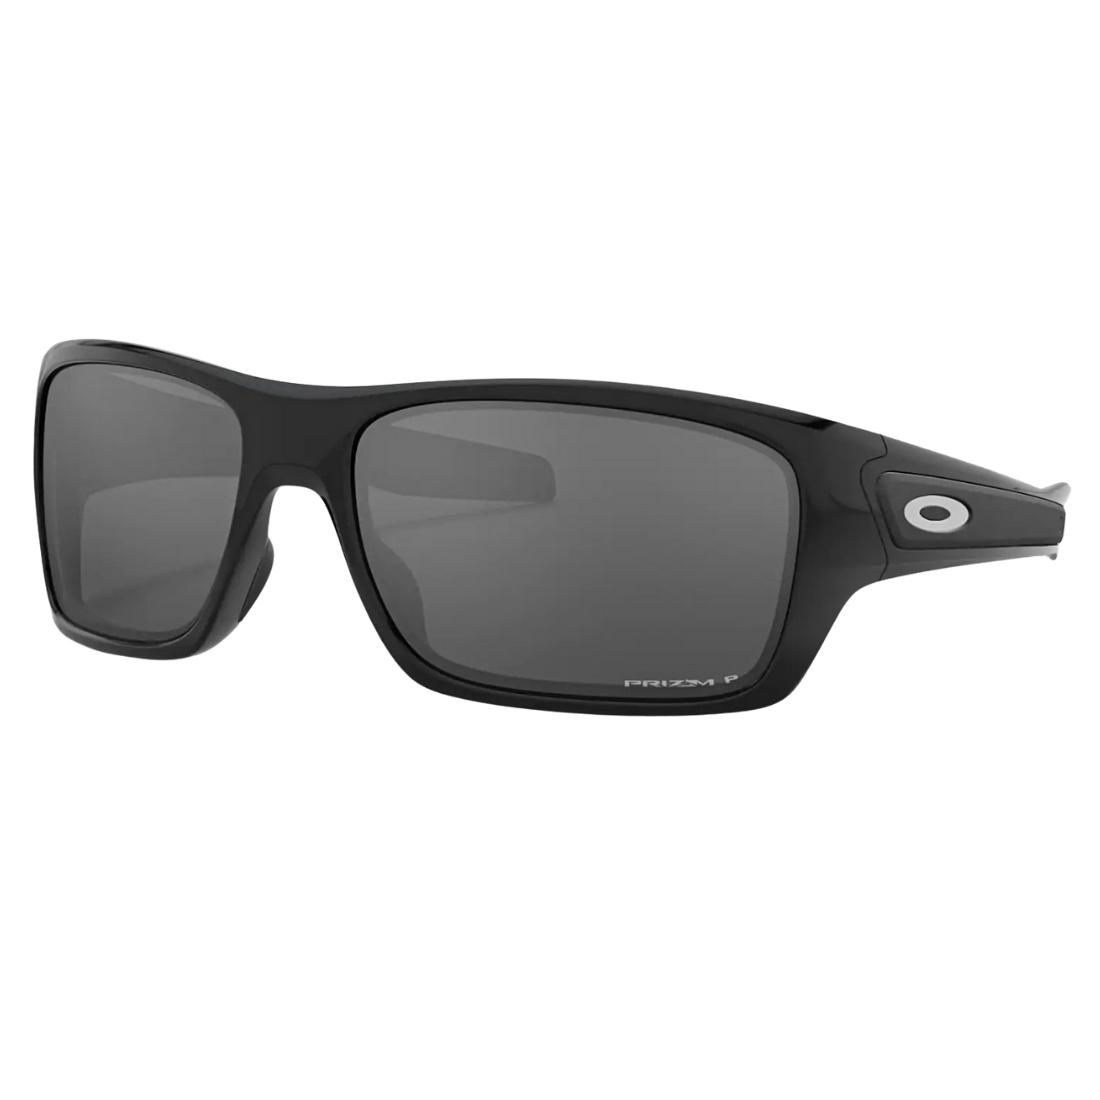 Oakley Turbine Sunglasses - Polished Black/Prizm Black Polarized - Square/Rectangular Sunglasses by Oakley